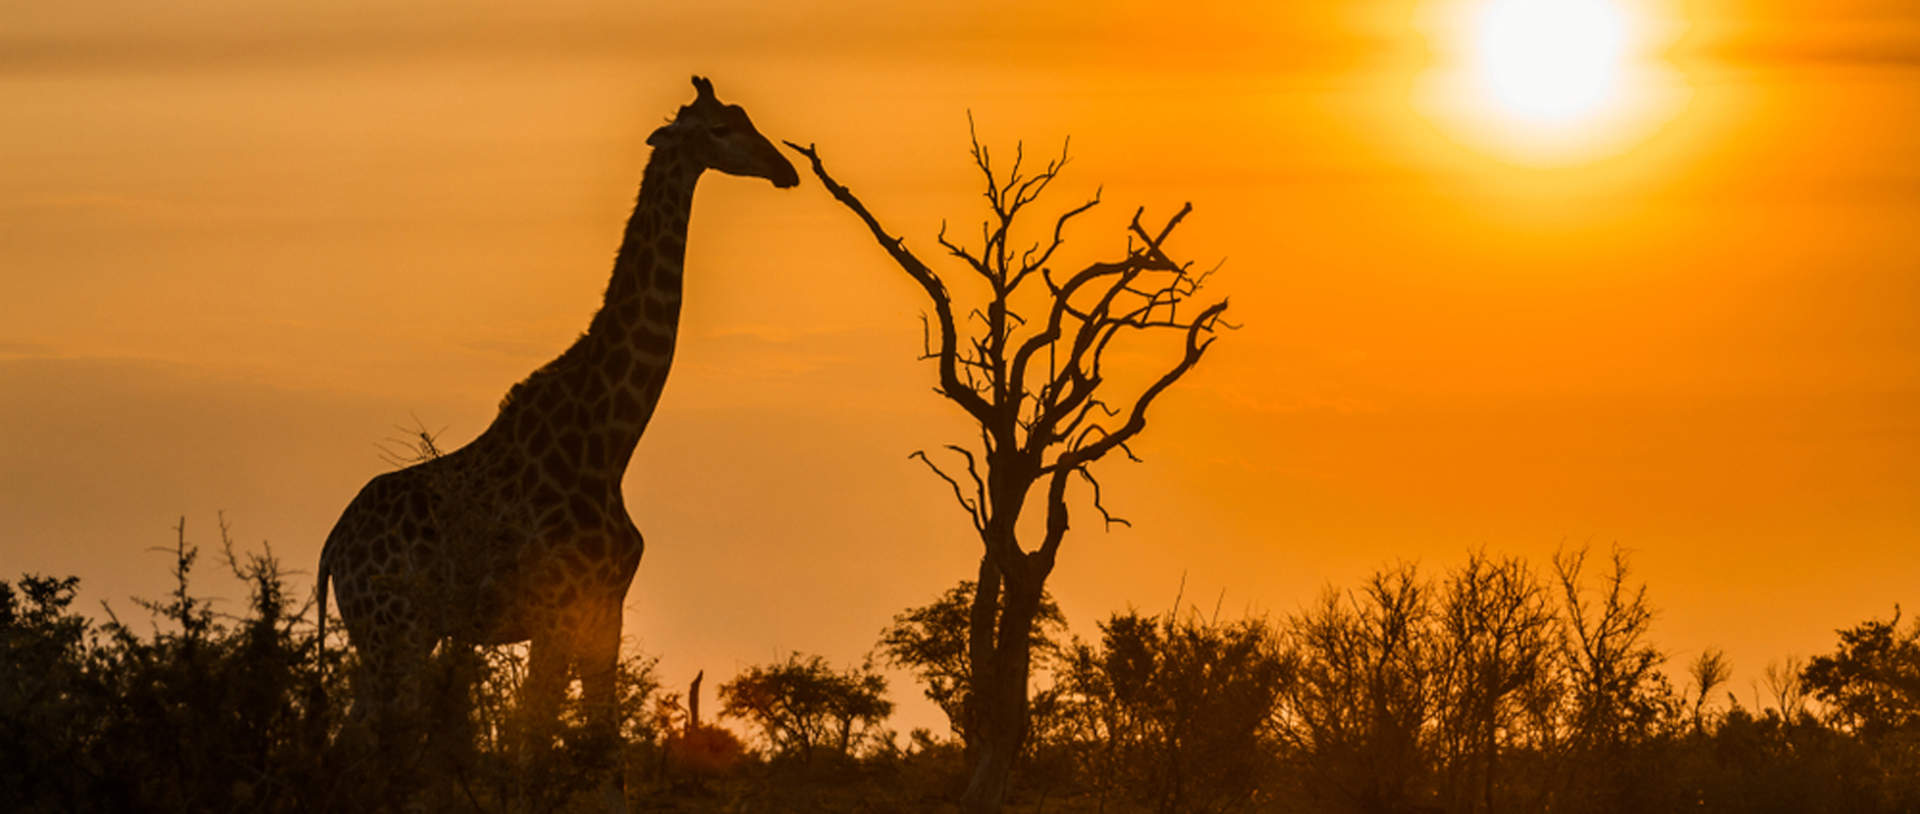 Giraffe In Kruger National Park, South Africa